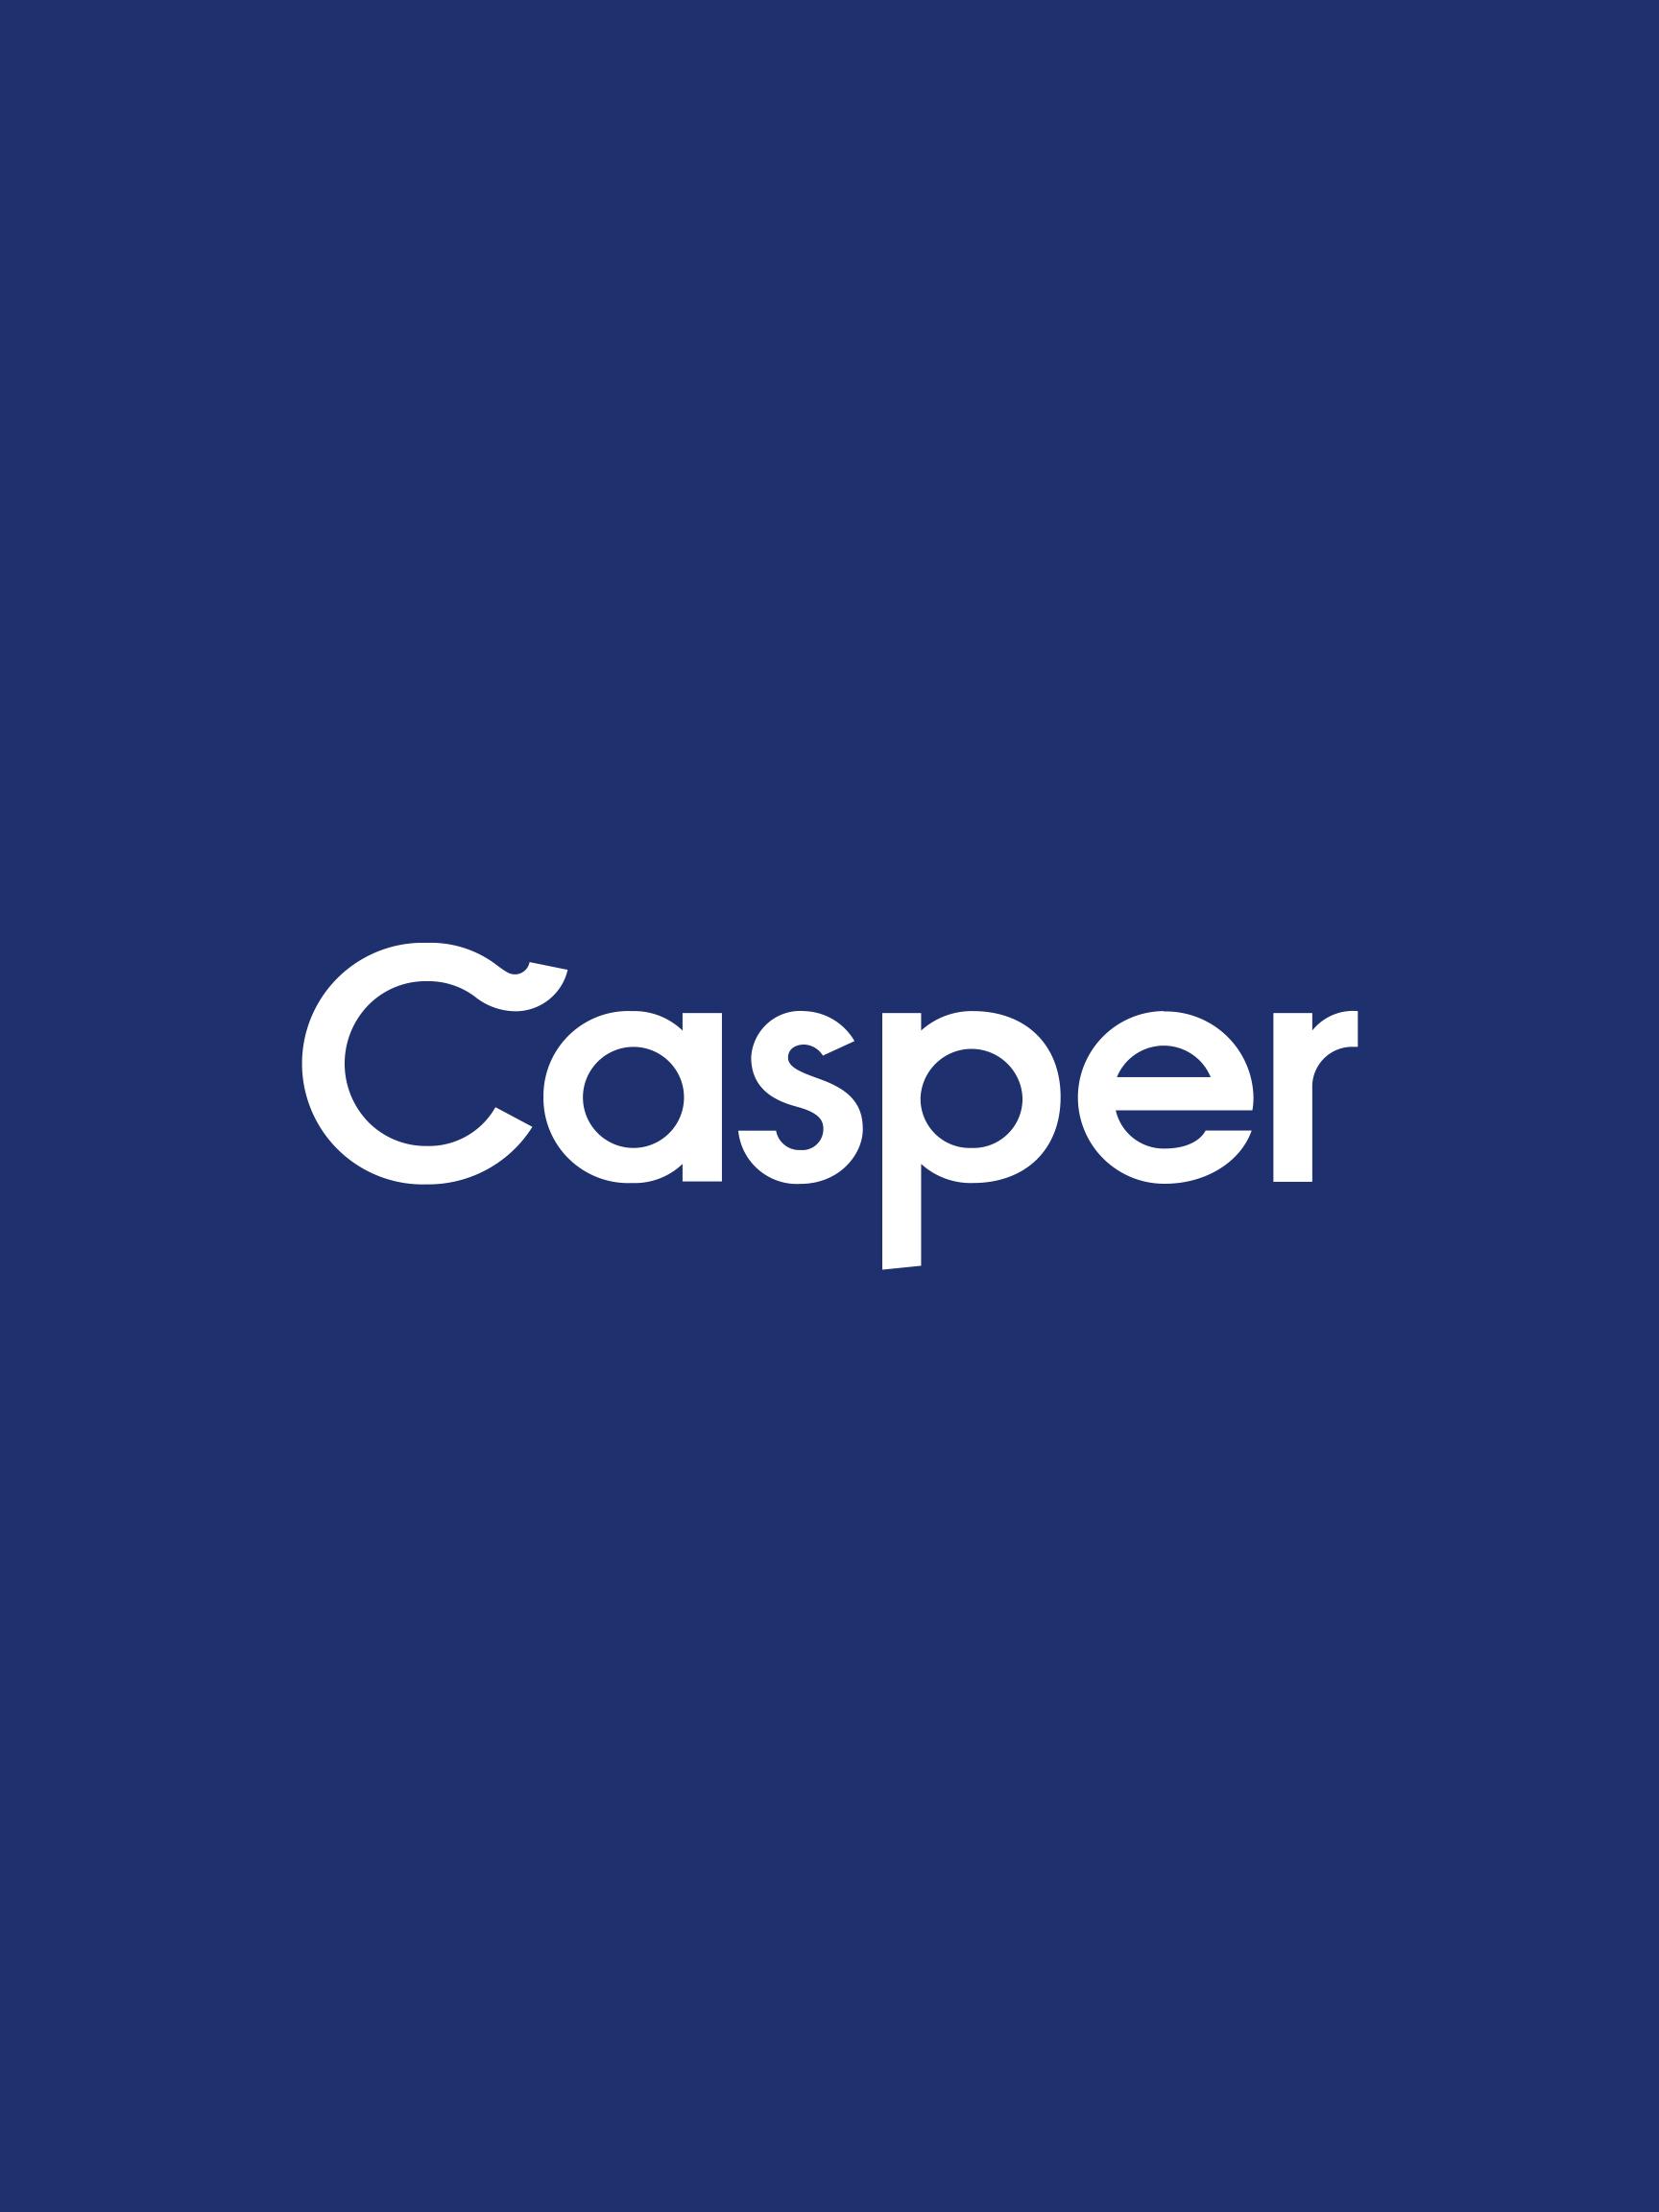 Casper logo 2x